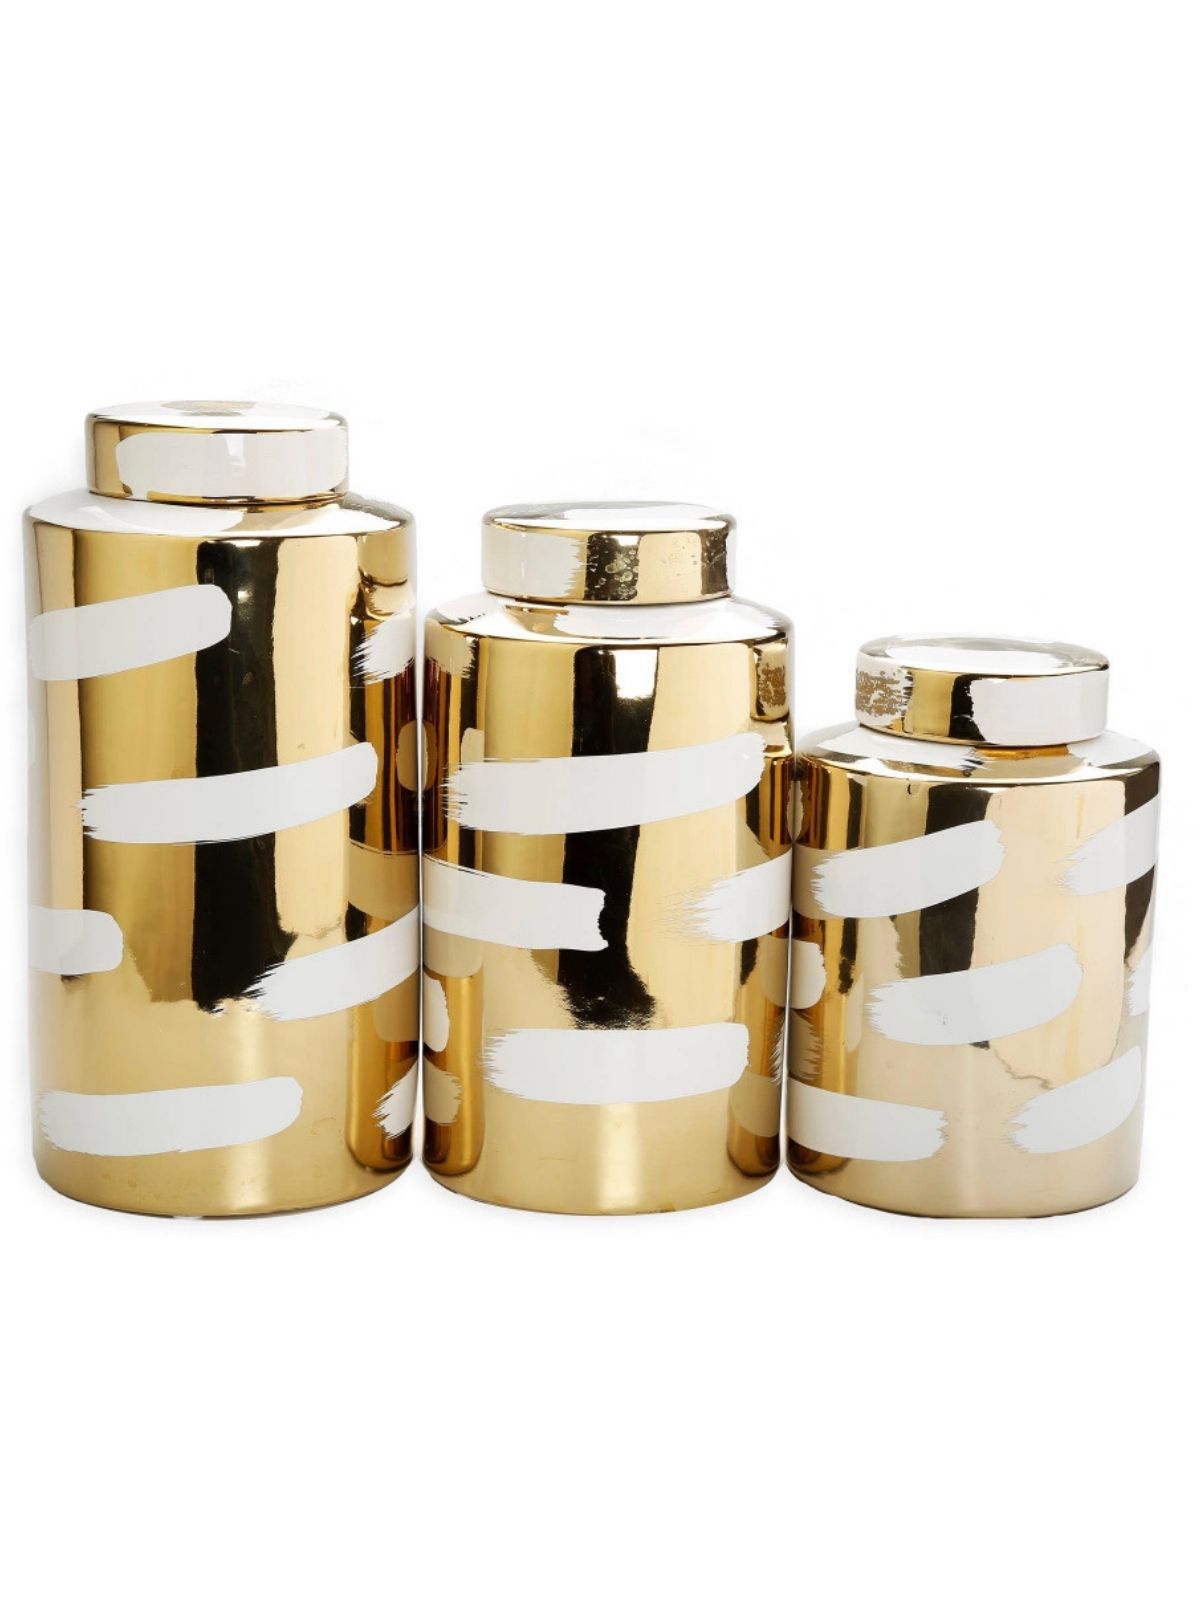 This ceramic decorative jar has a crisp white brushstroke design on the glossy gold finish.